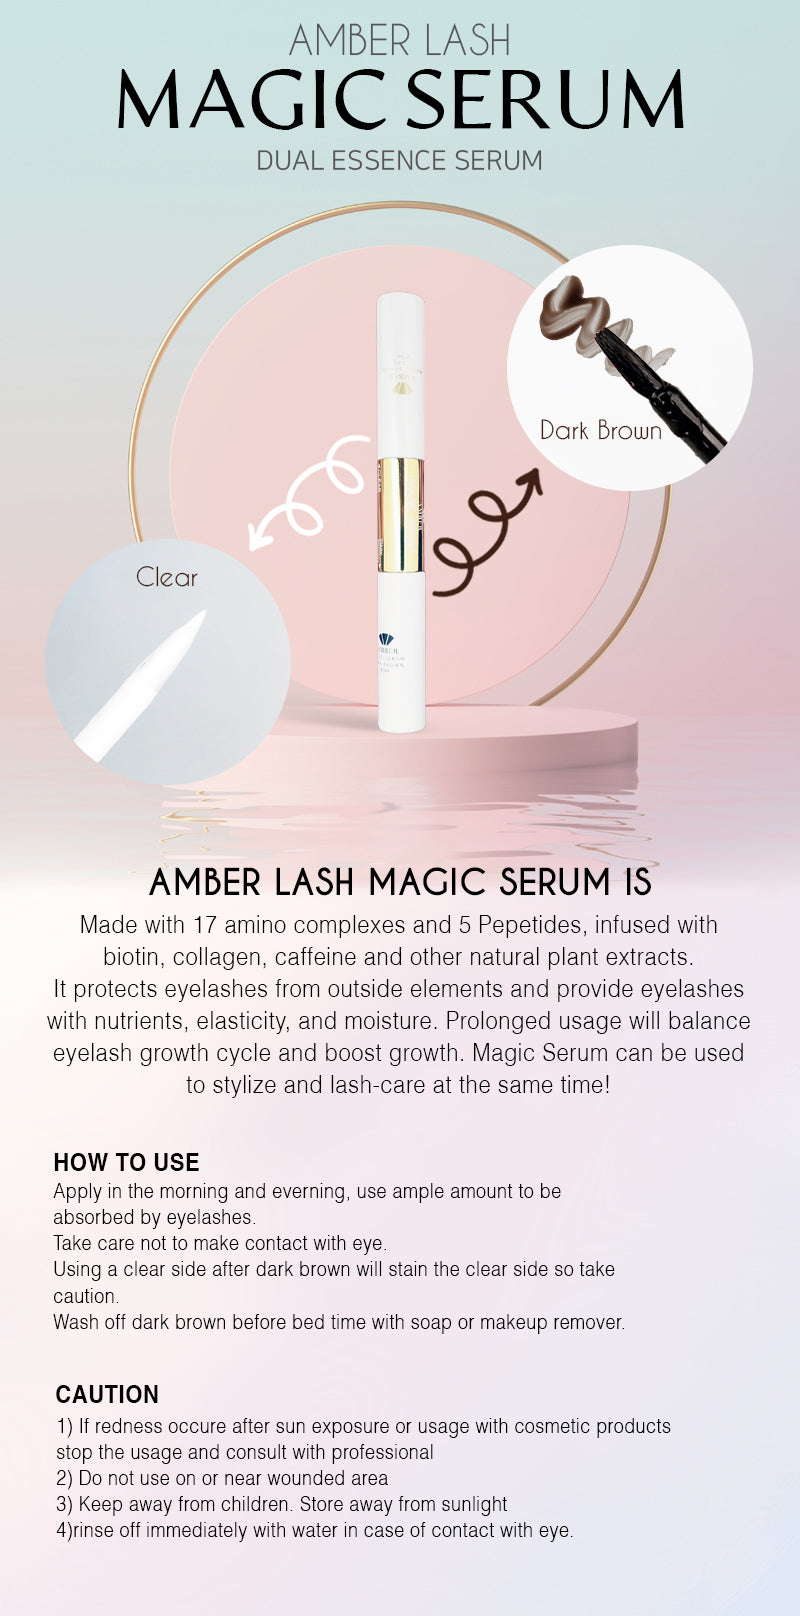 Amber Lash Magic Serum